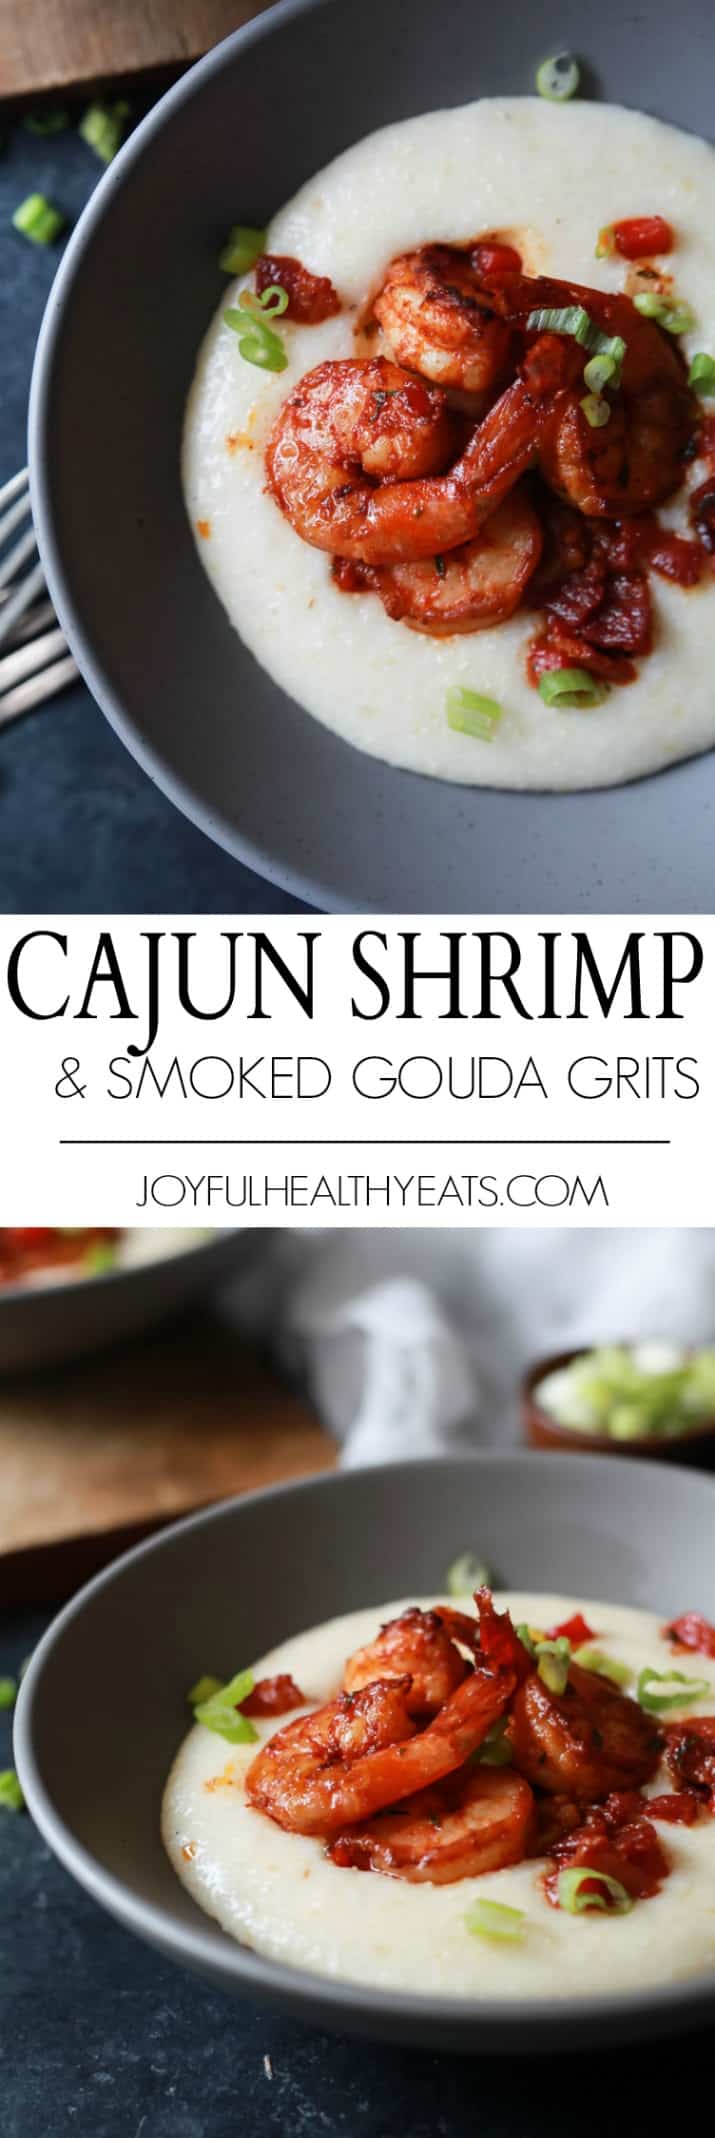 Cajun Shrimp & Smoked Gouda Grits in a bowl